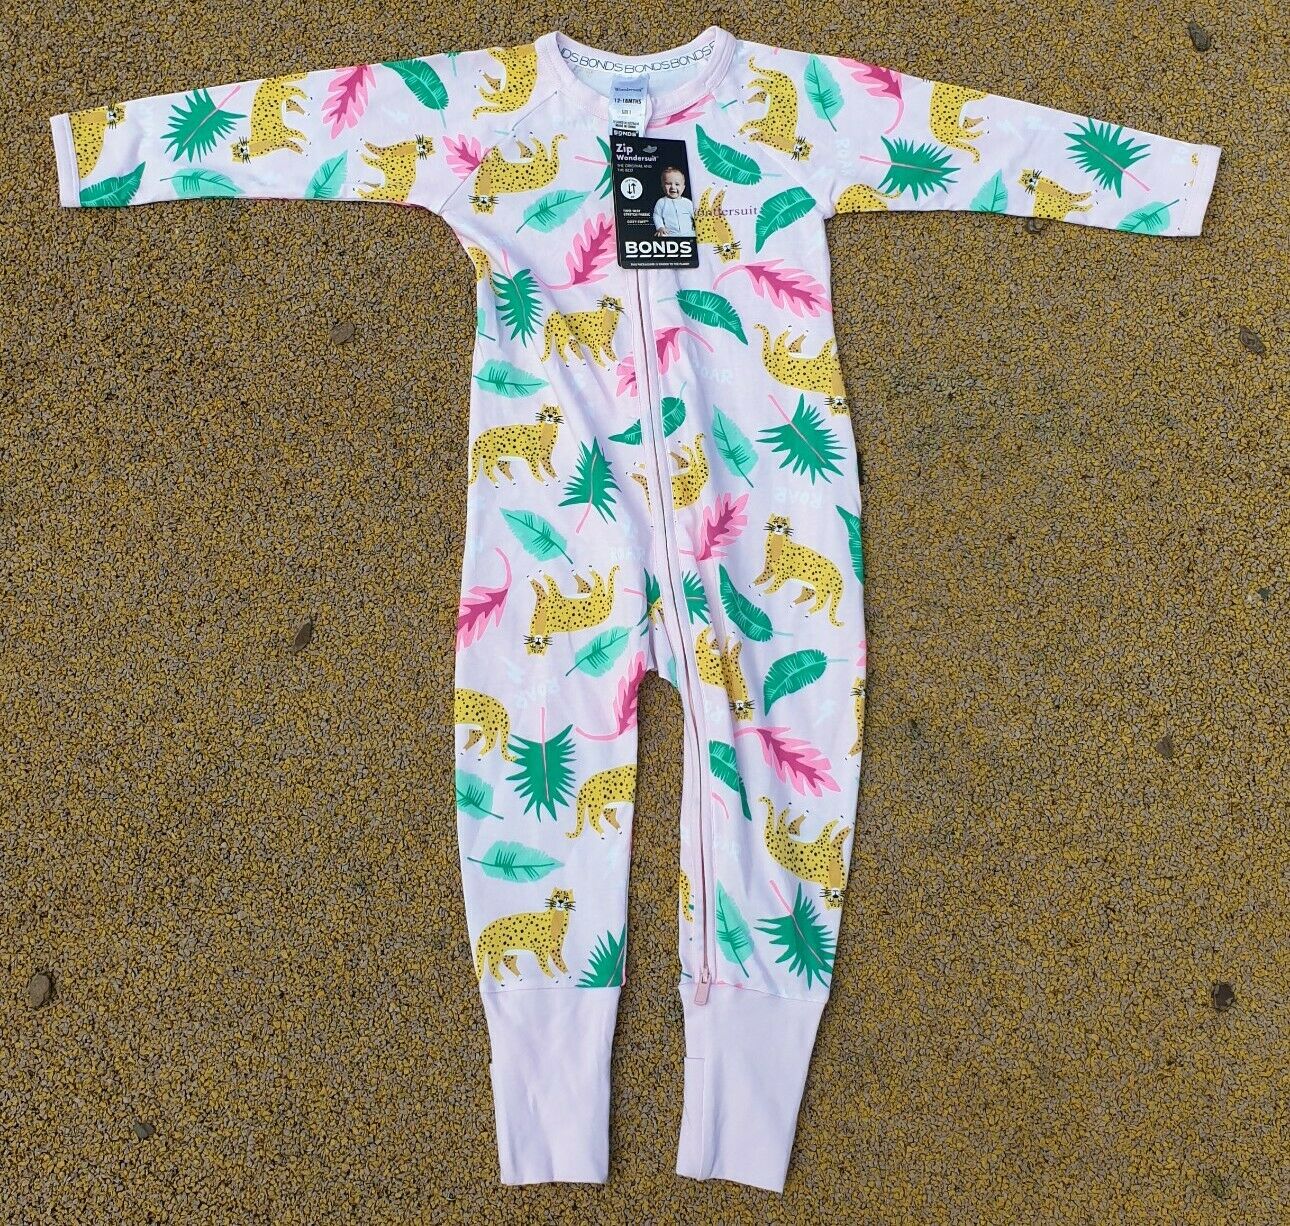 Bonds Baby girl Toddler Jungle Print Wondersuit Zippy Sz 12 to 18 months 1